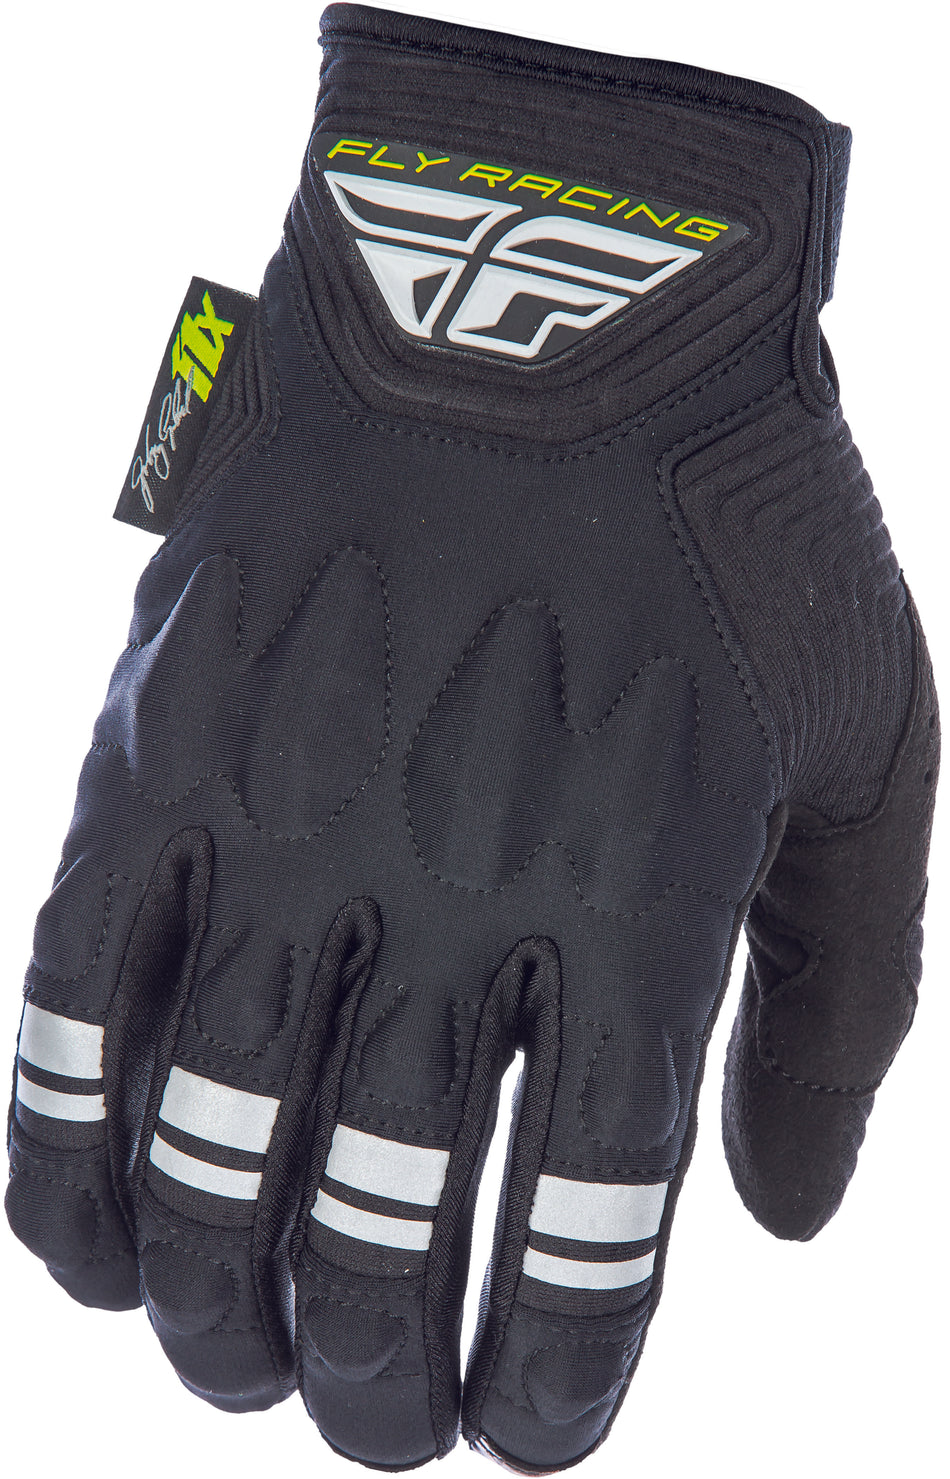 FLY RACING Johnny Campbell Sig Patrol Xc Lite Gloves Black/Grey 370-68013